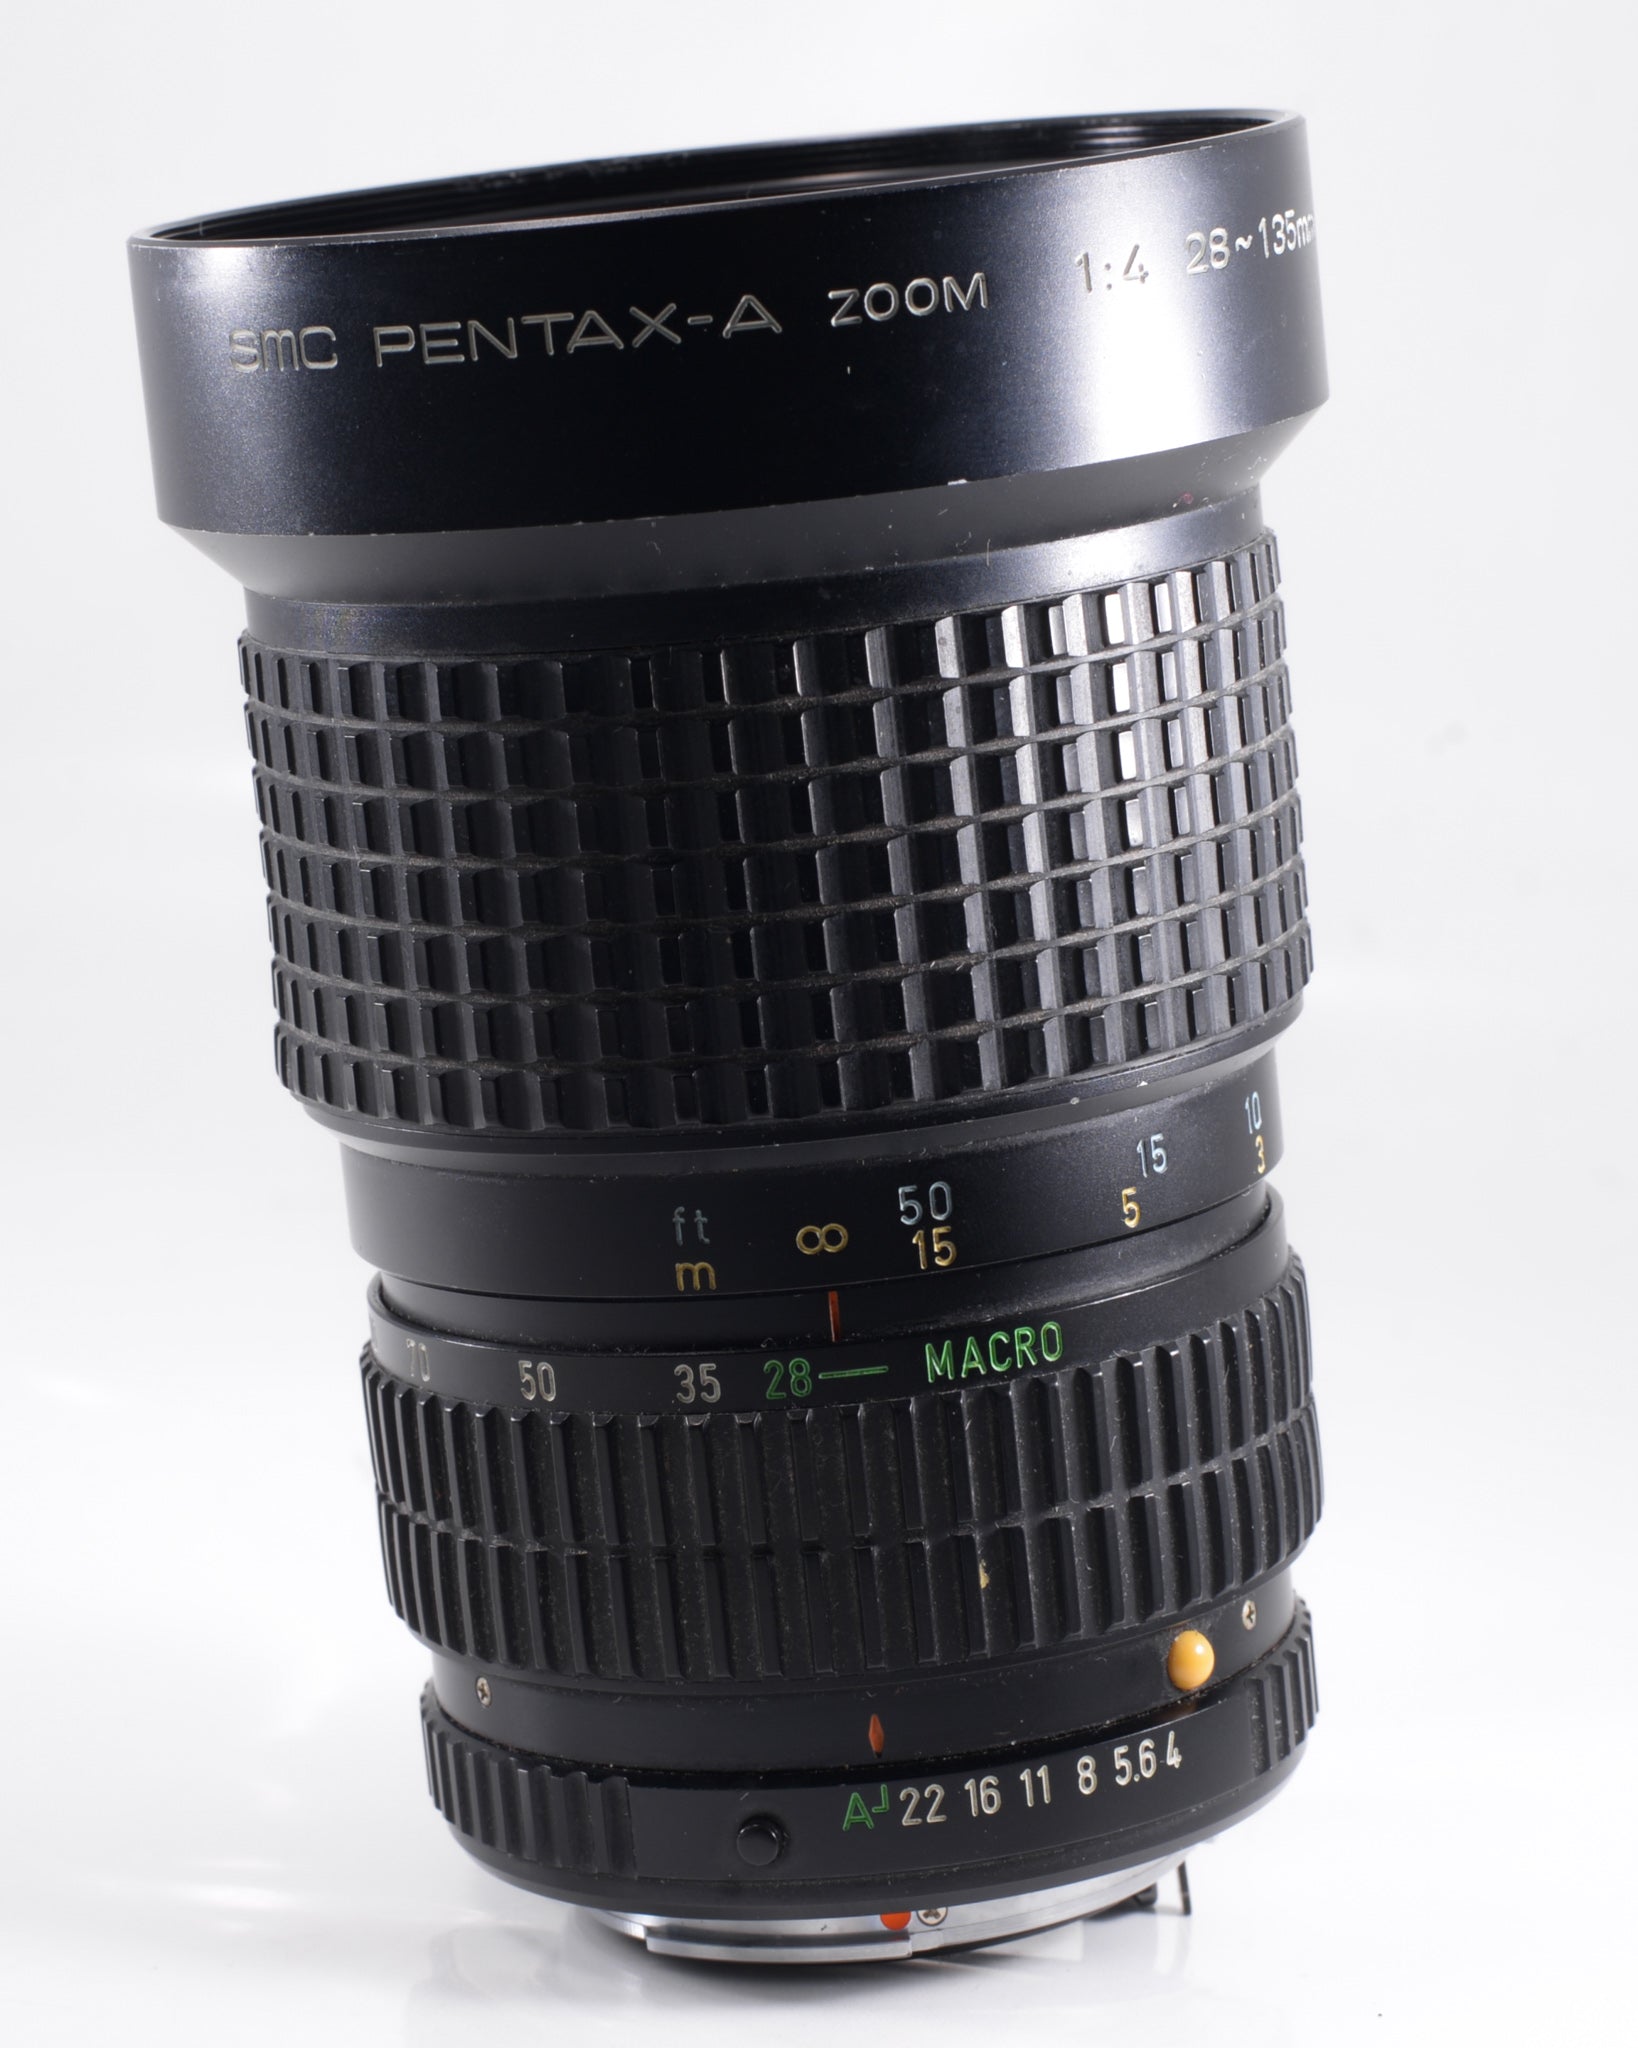 SMC Pentax-A 28-135mm f4 PK objectif